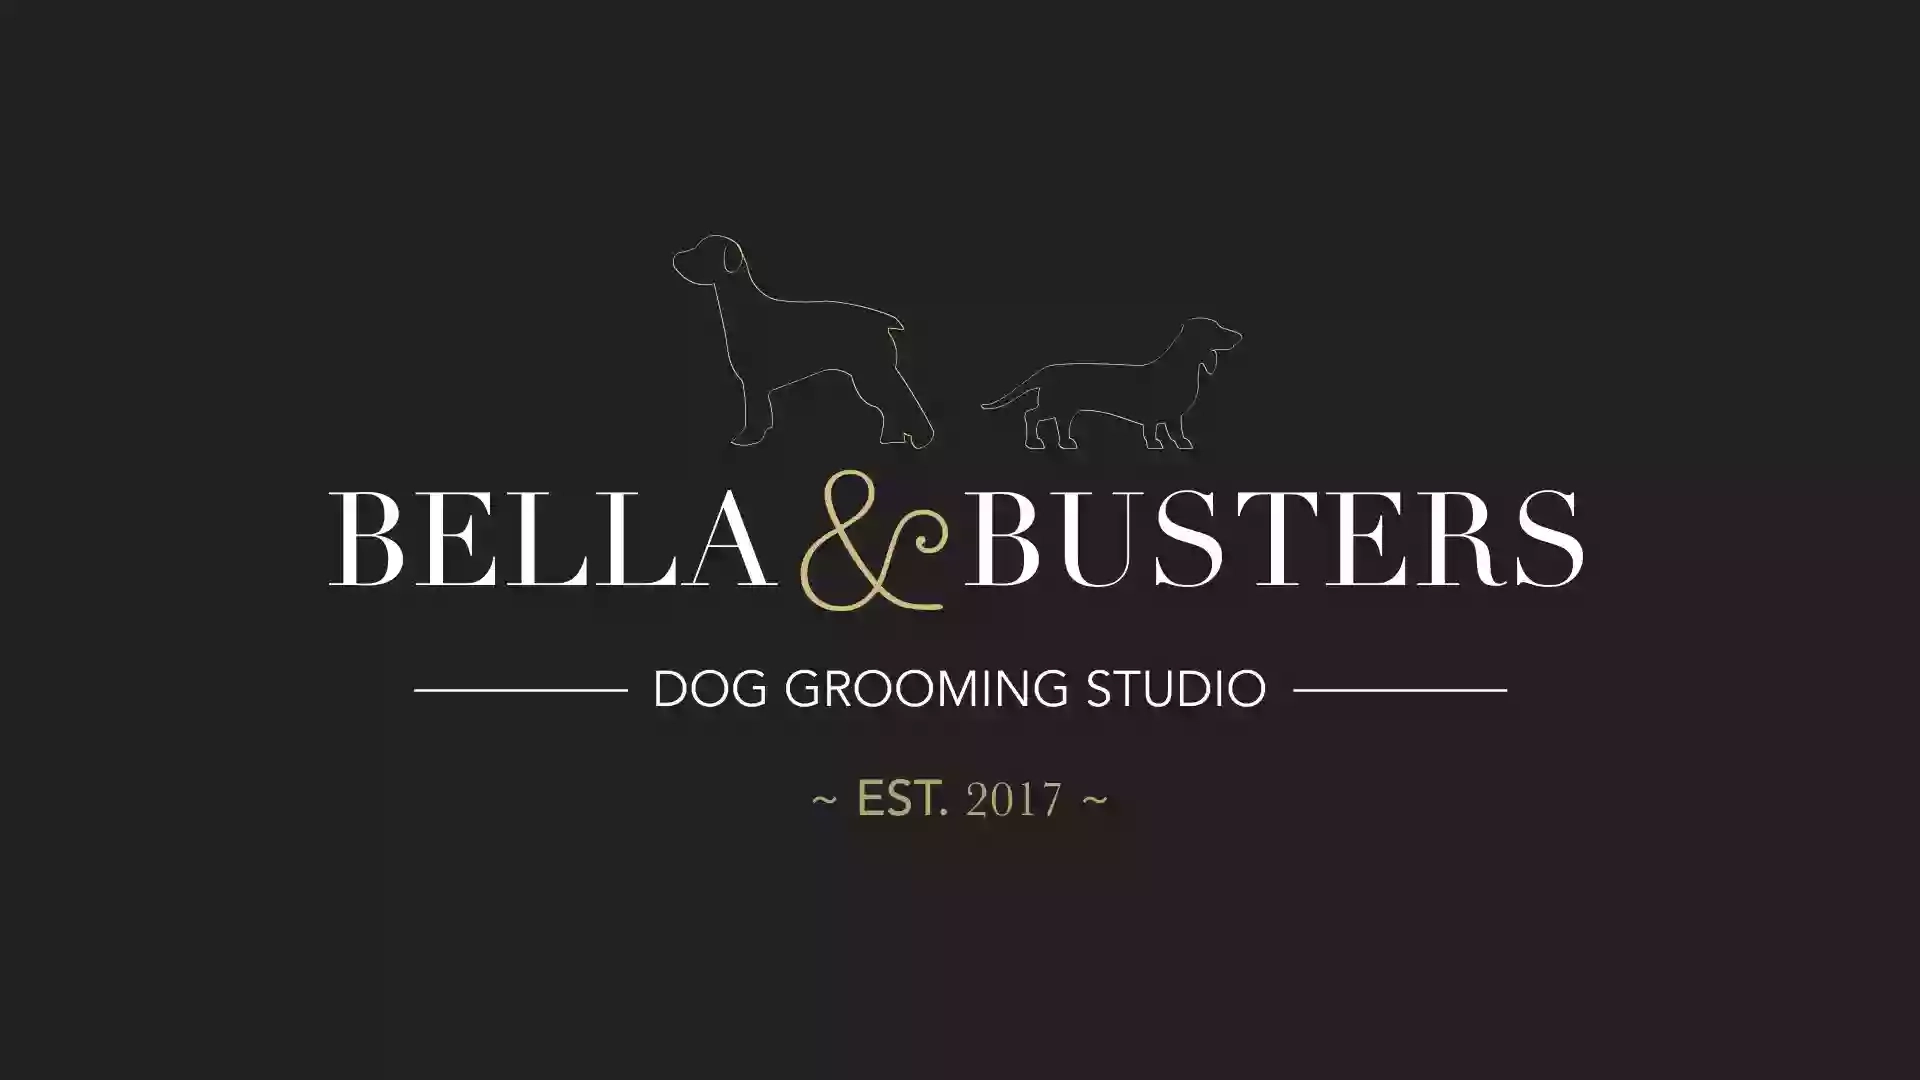 Bella & Buster's Dog Grooming Studio